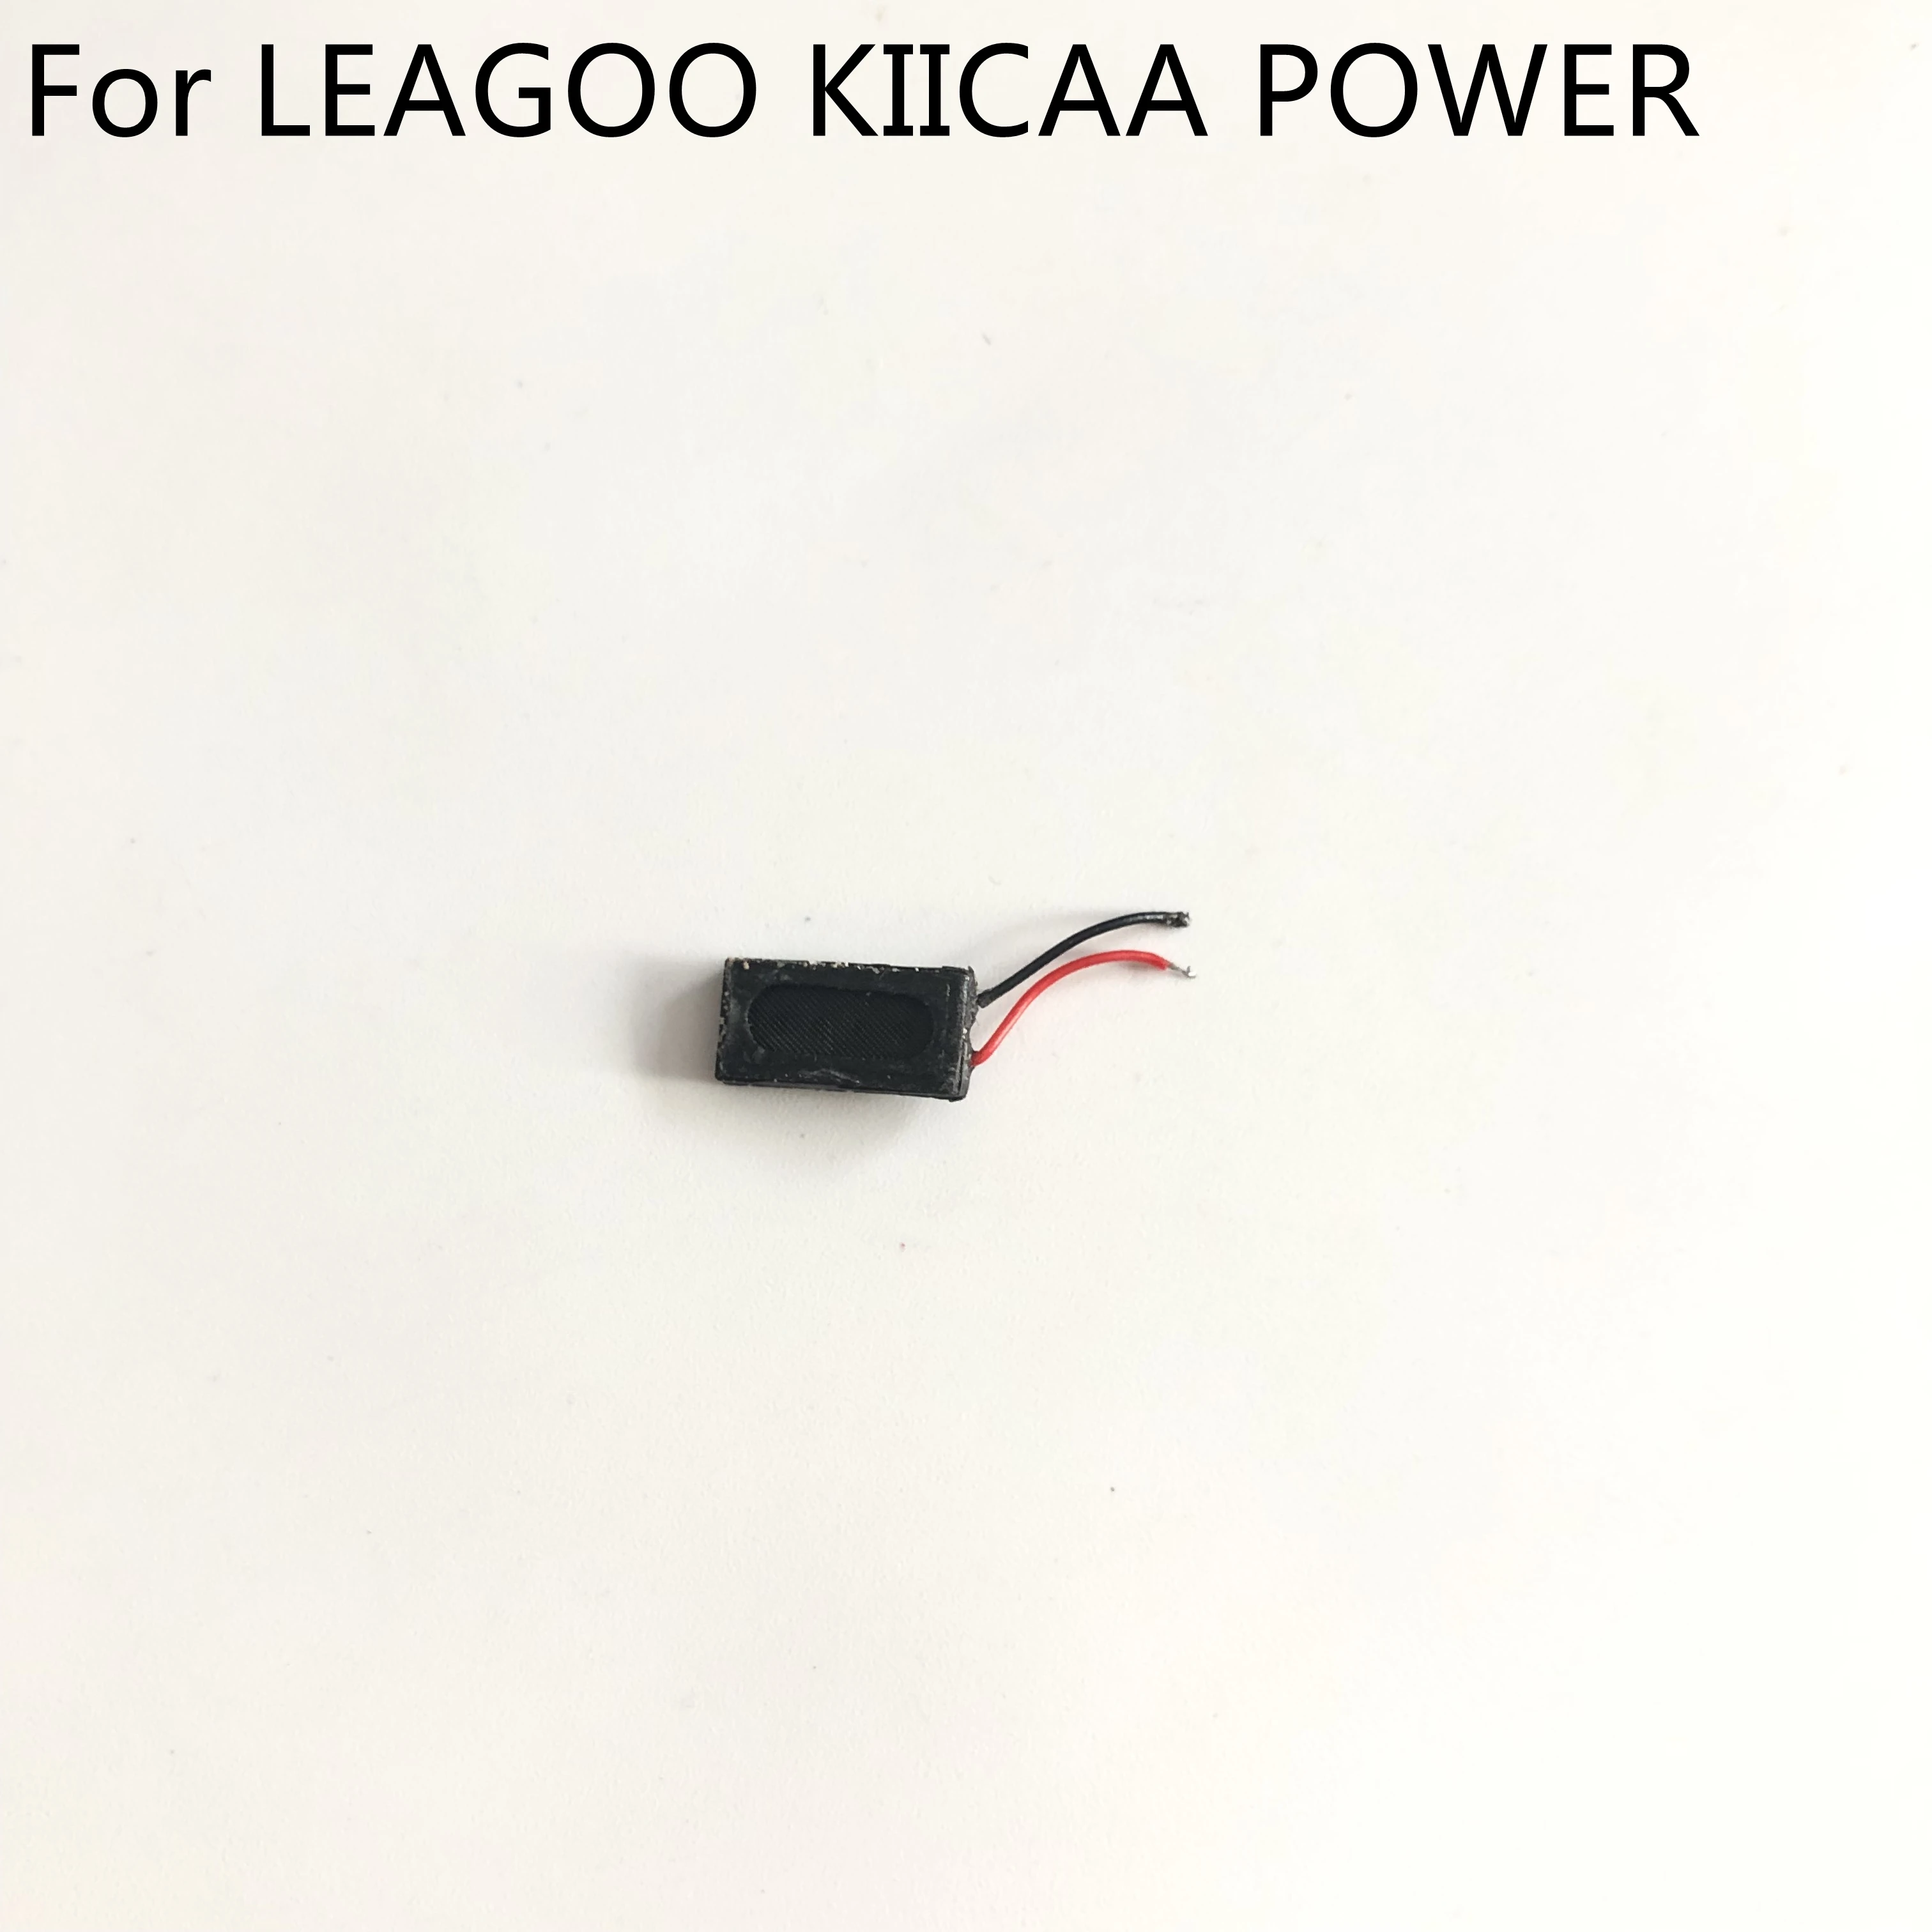 

Used Voice Receiver Earpiece Ear Speaker For Leagoo Kiicaa Power MT6580A Quad Core 5.0'' HD 1280x720 Smartphone